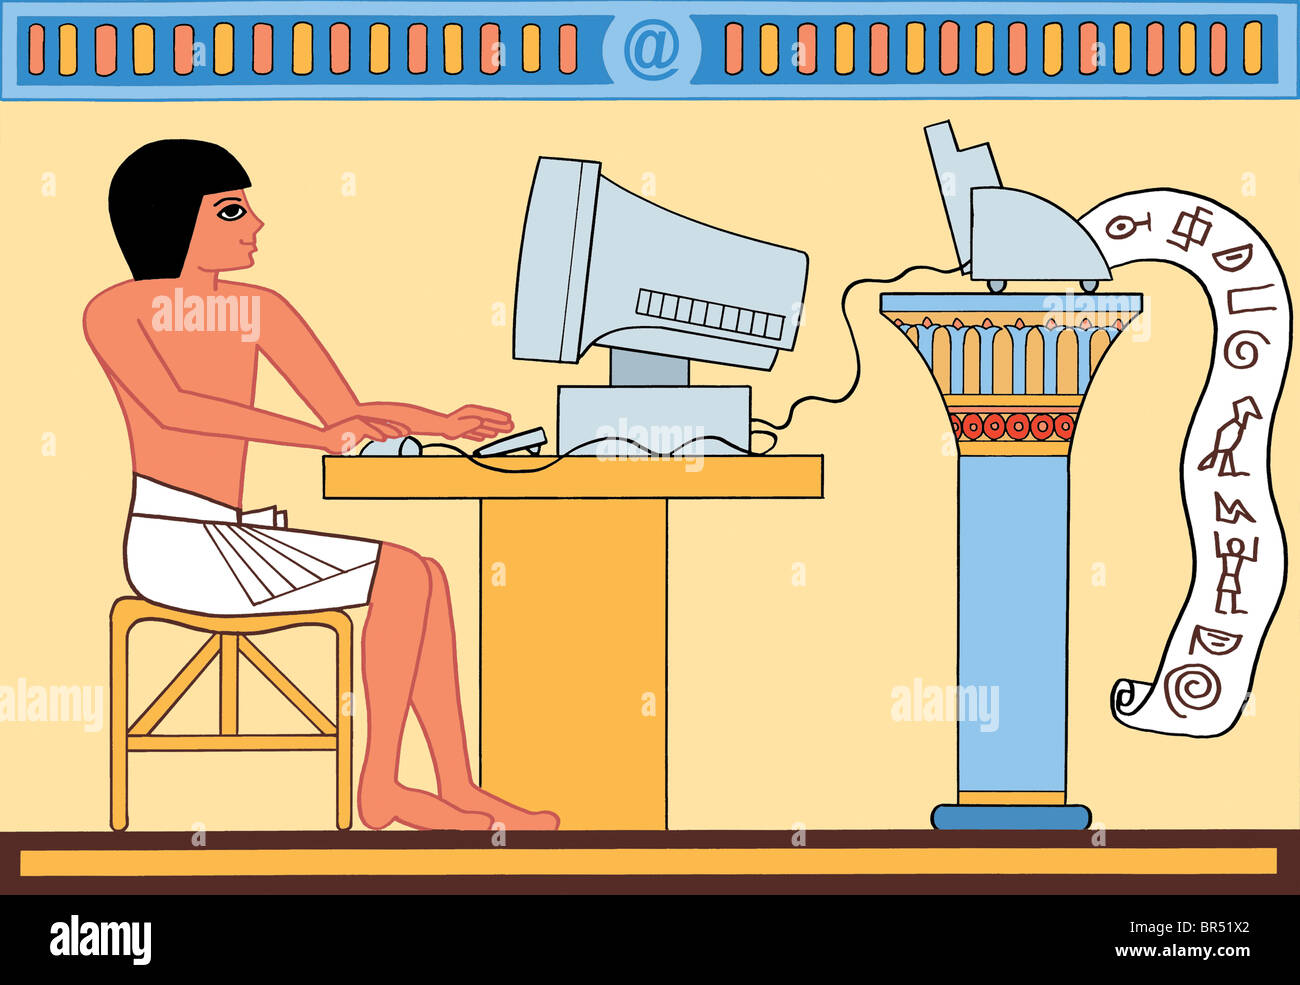 un-antiguo-egipcio-con-ordenador-e-impresion-de-scripts-br51x2.jpg